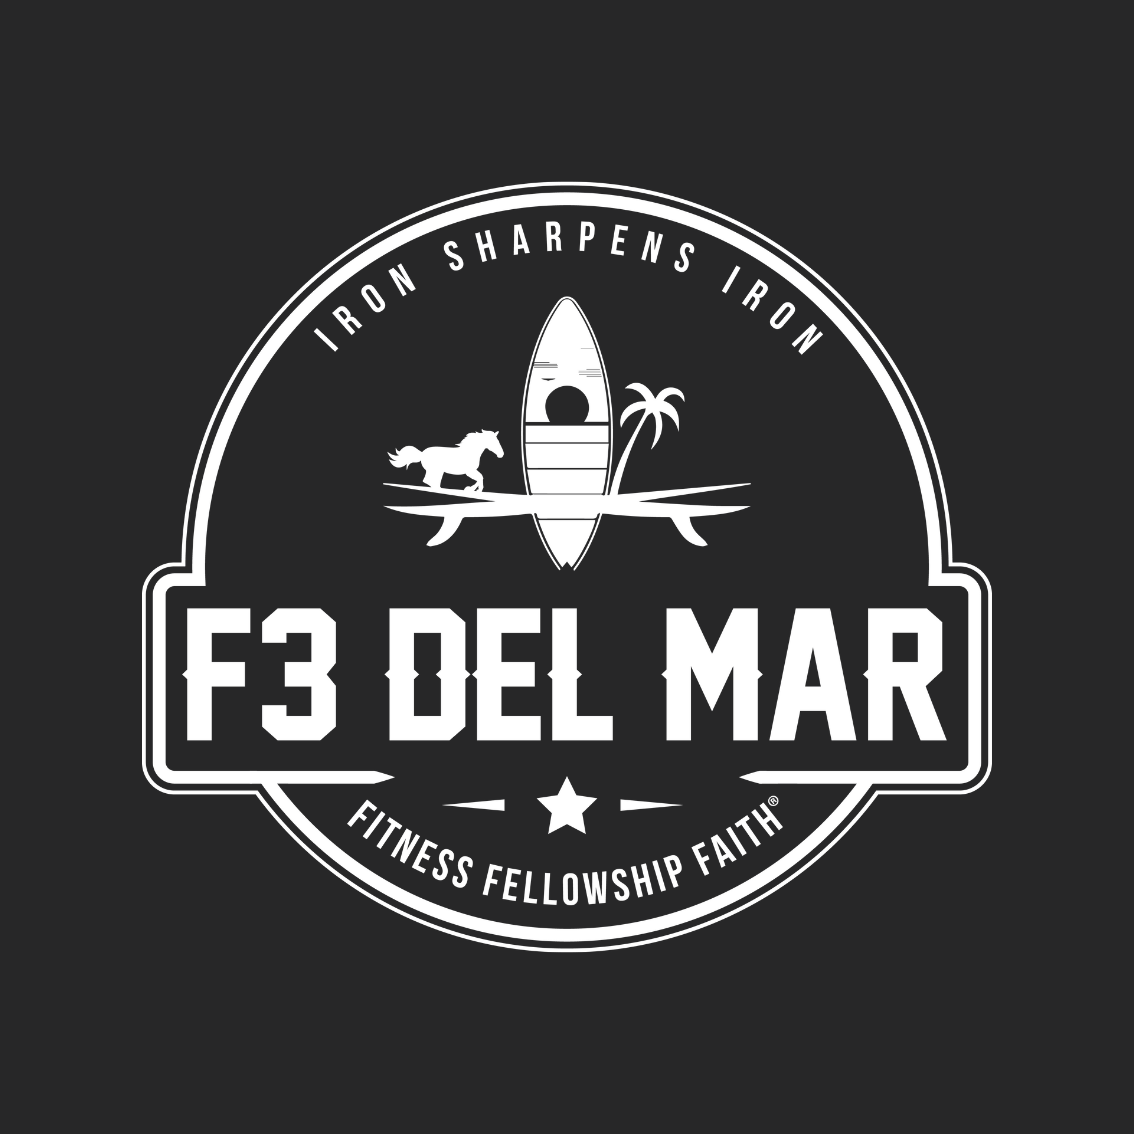 F3 Del Mar Pre-Order January 2023